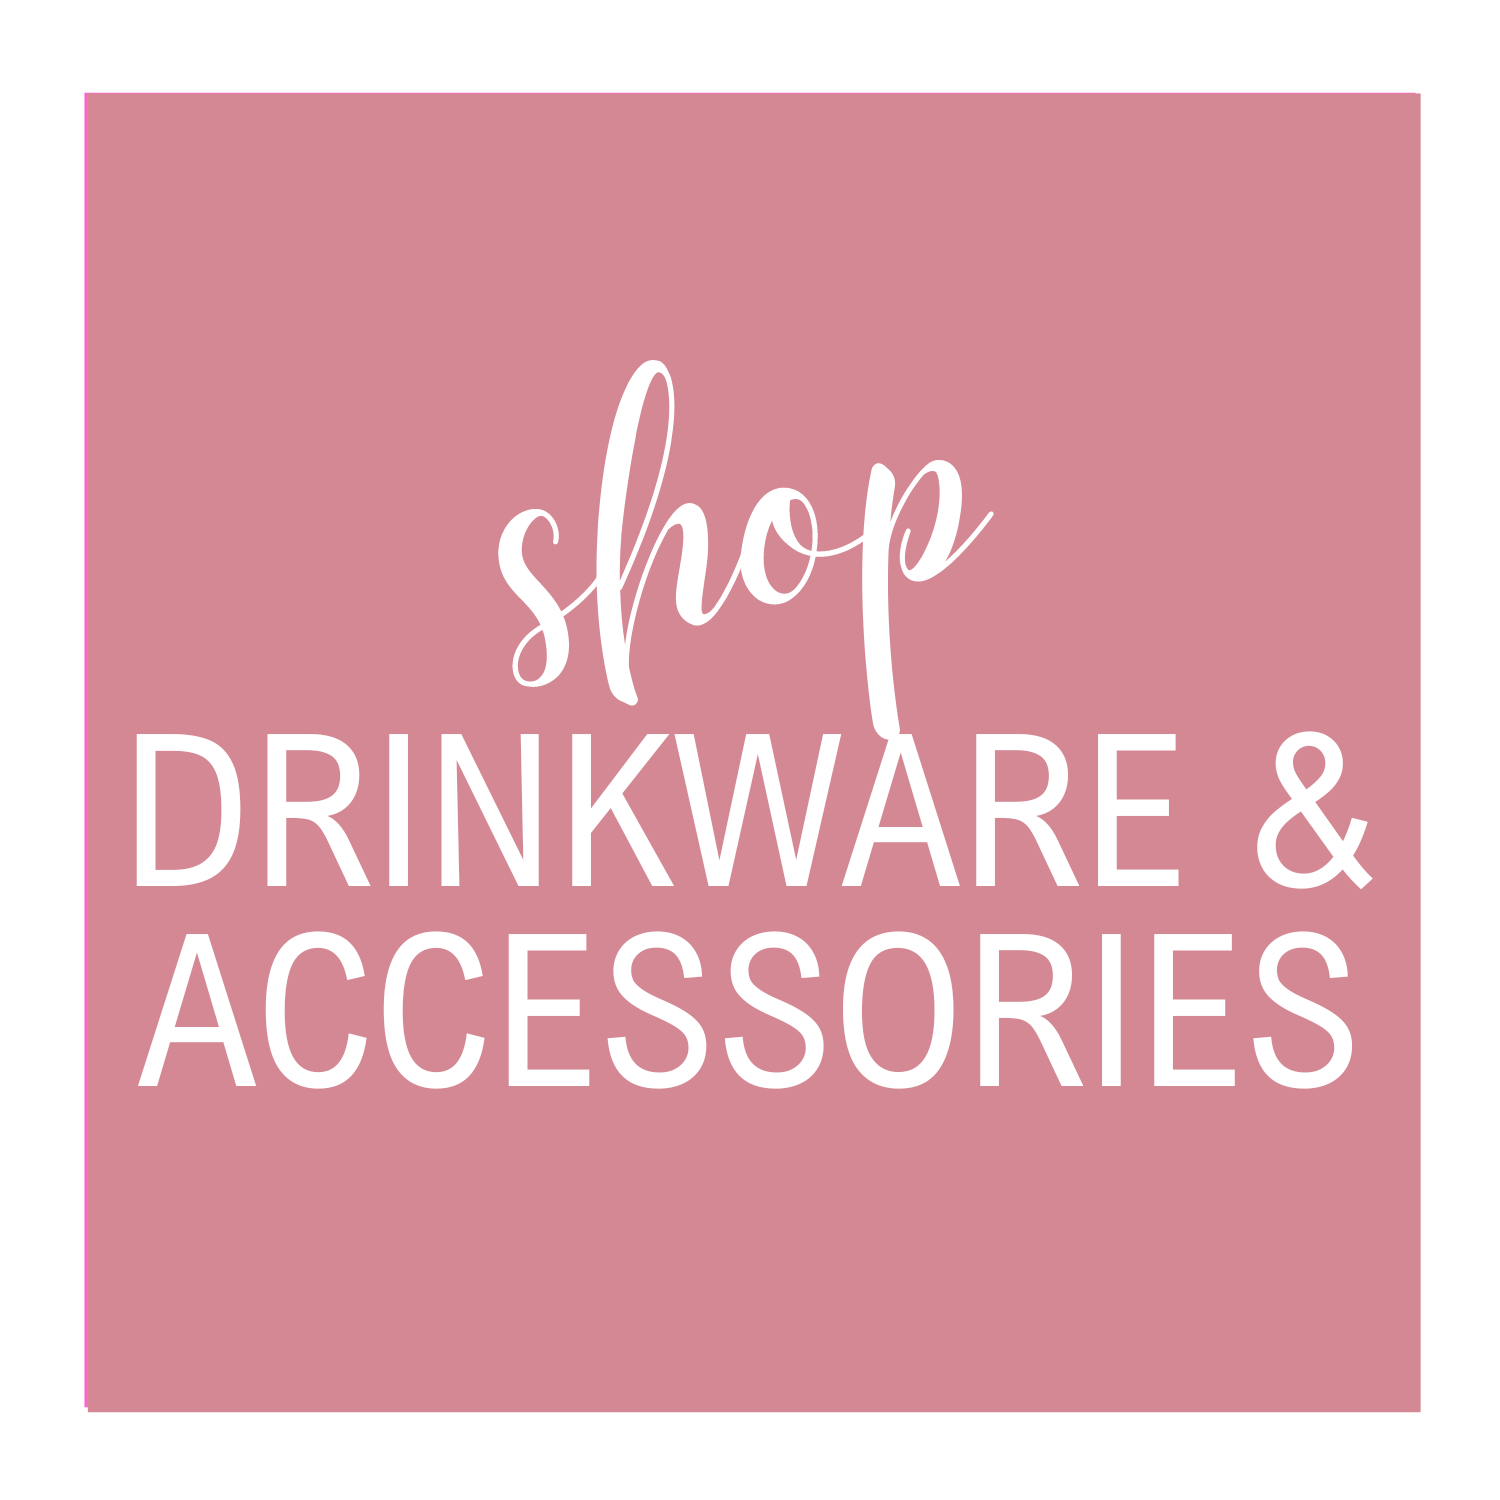 Drinkware & Accessories